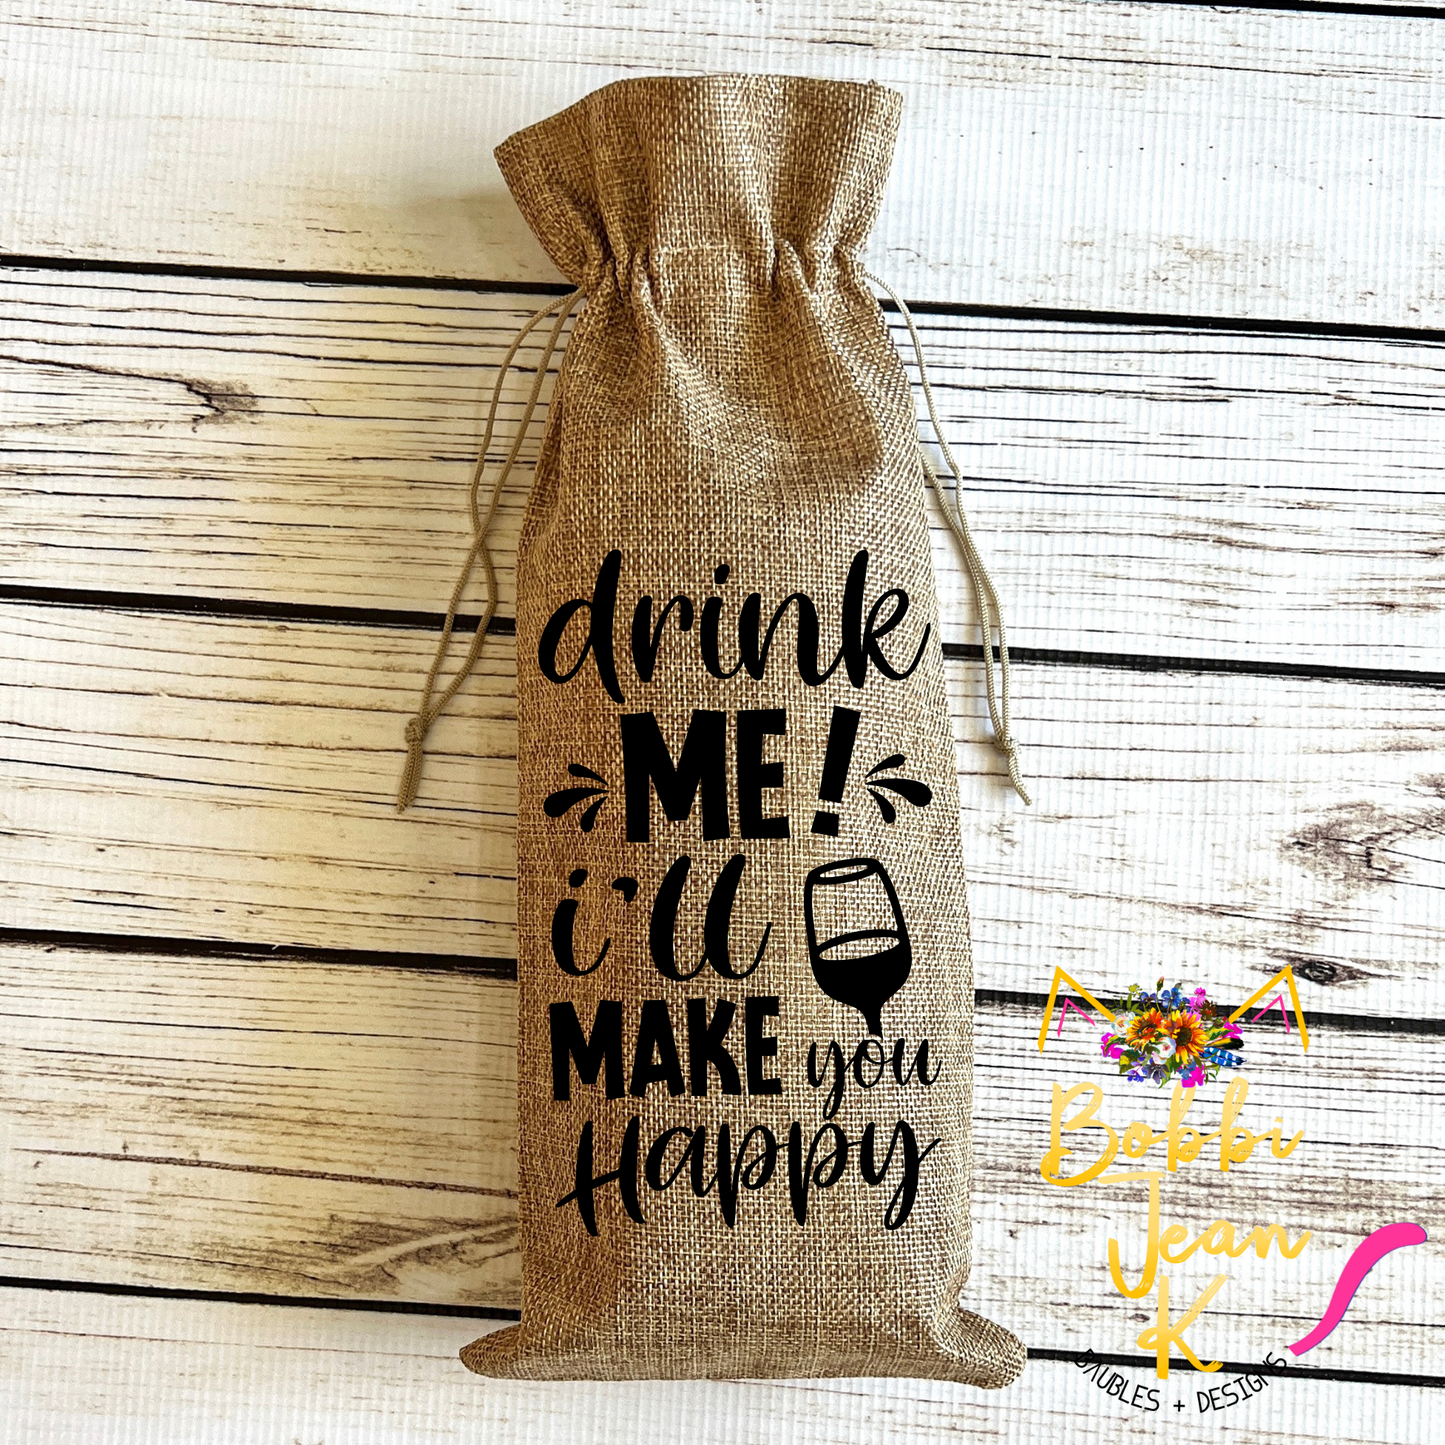 Wine Gift Bag: Drink Me I'll Make You Happy